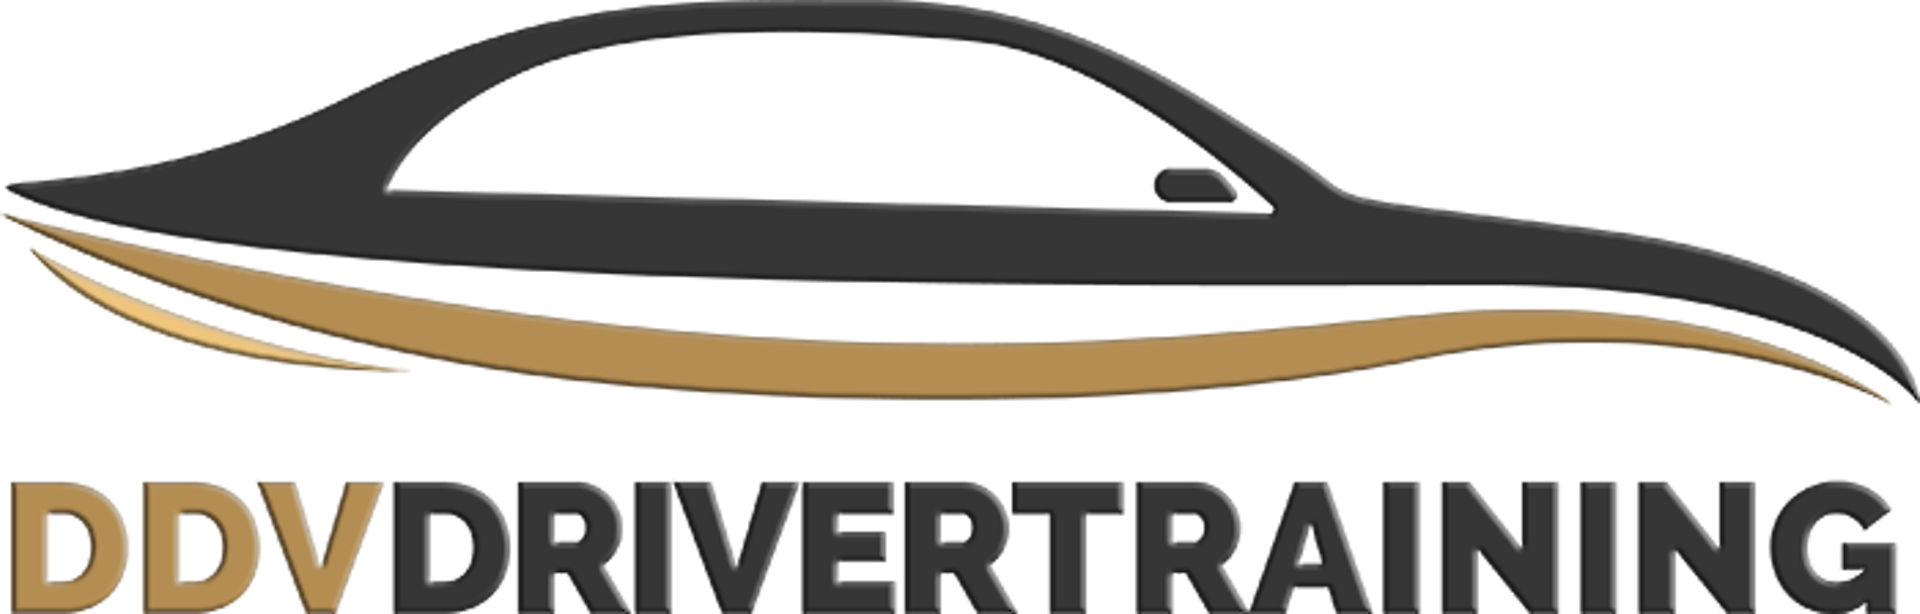 Logo DDV Driver Training